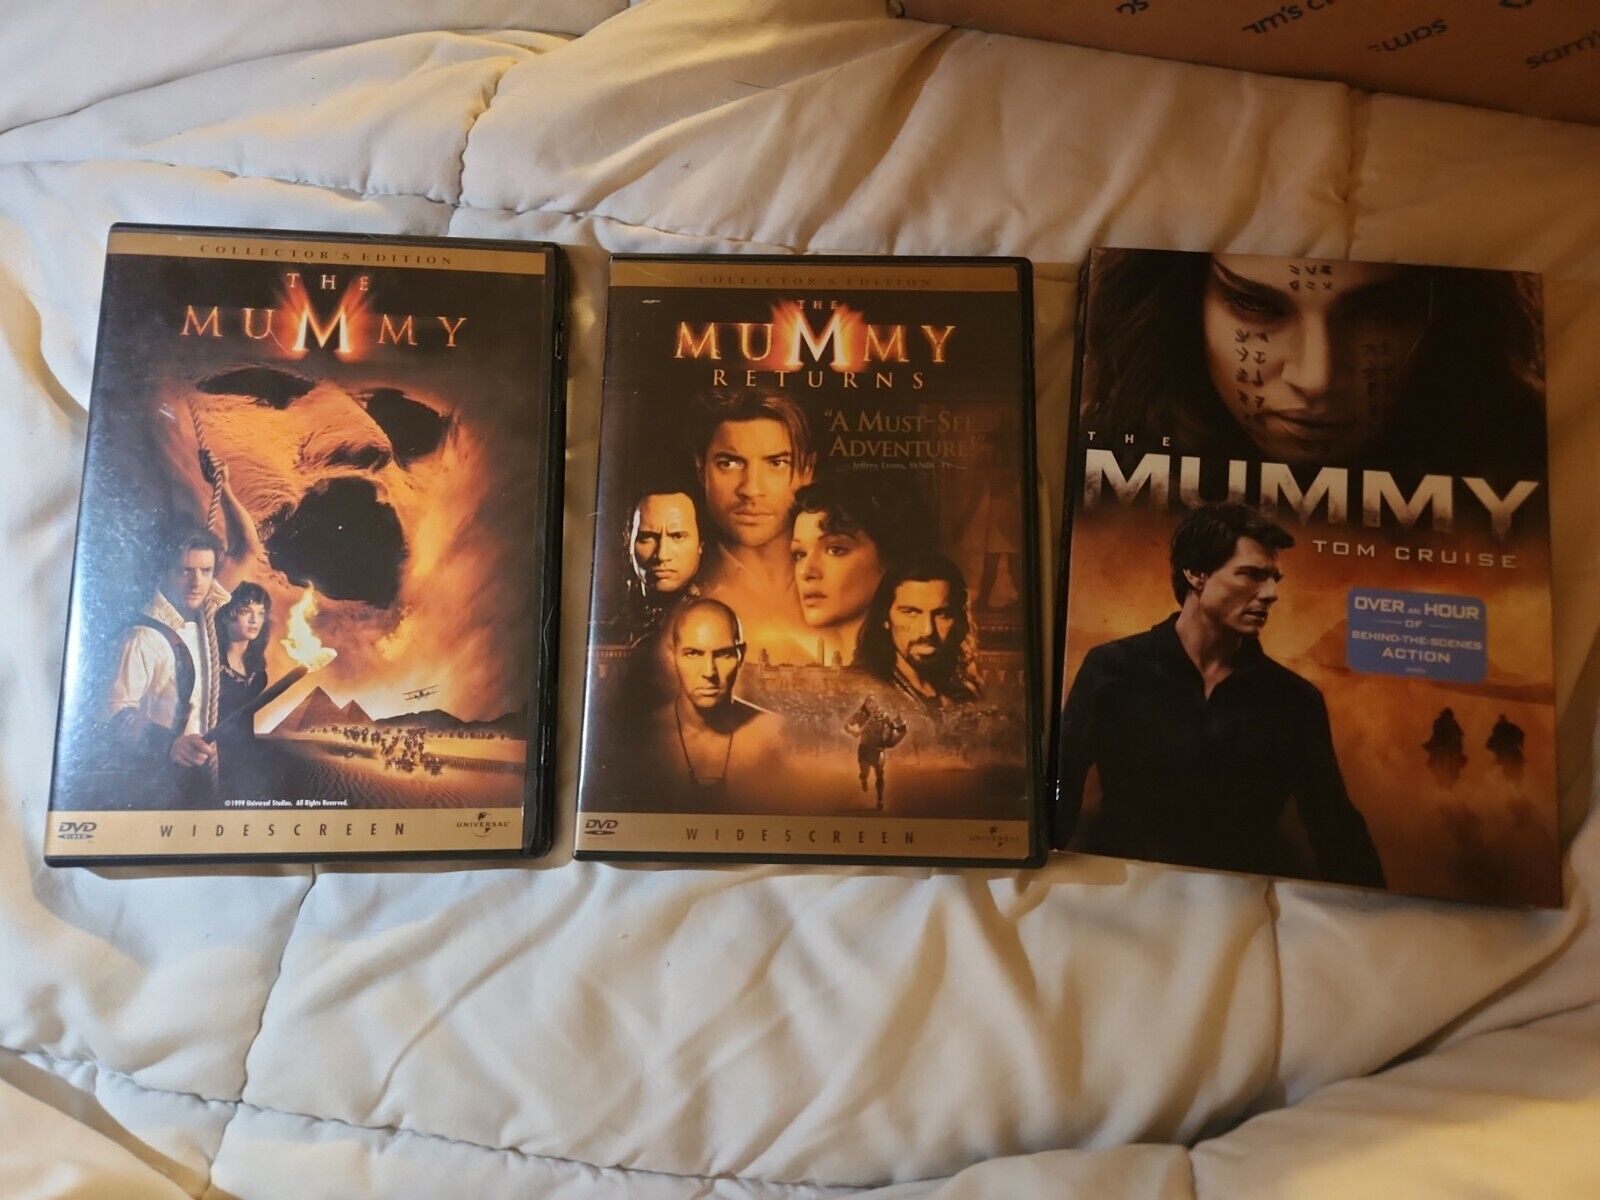 The Mummy, The Mummy Returns (Widescreen) and The Mummy w/Tom Cruise | eBay